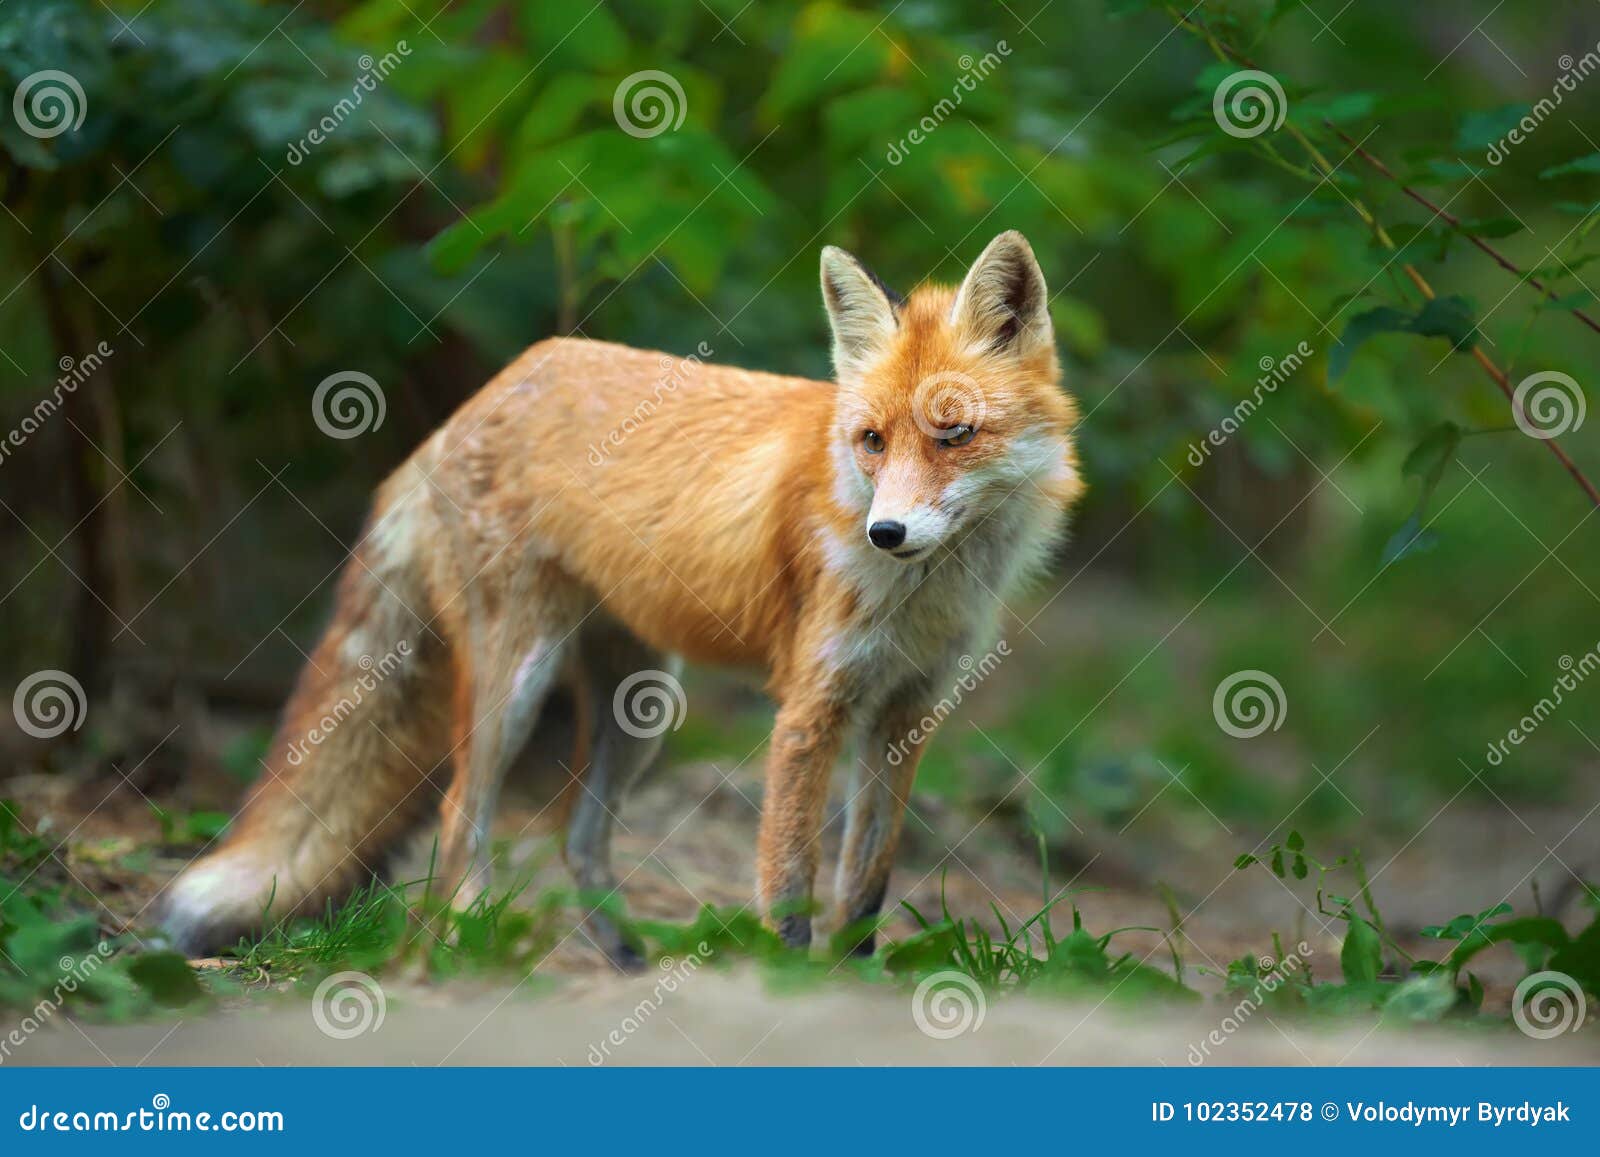 portrait of a red fox vulpes vulpes